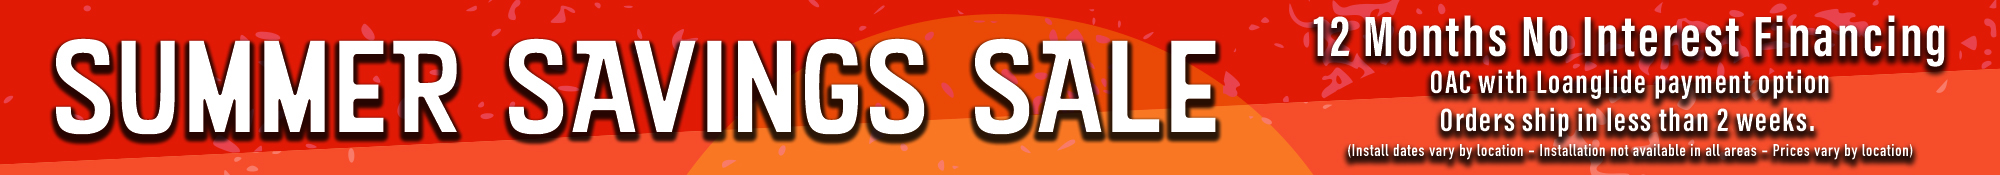 Summer_Savings_Sale_Banner